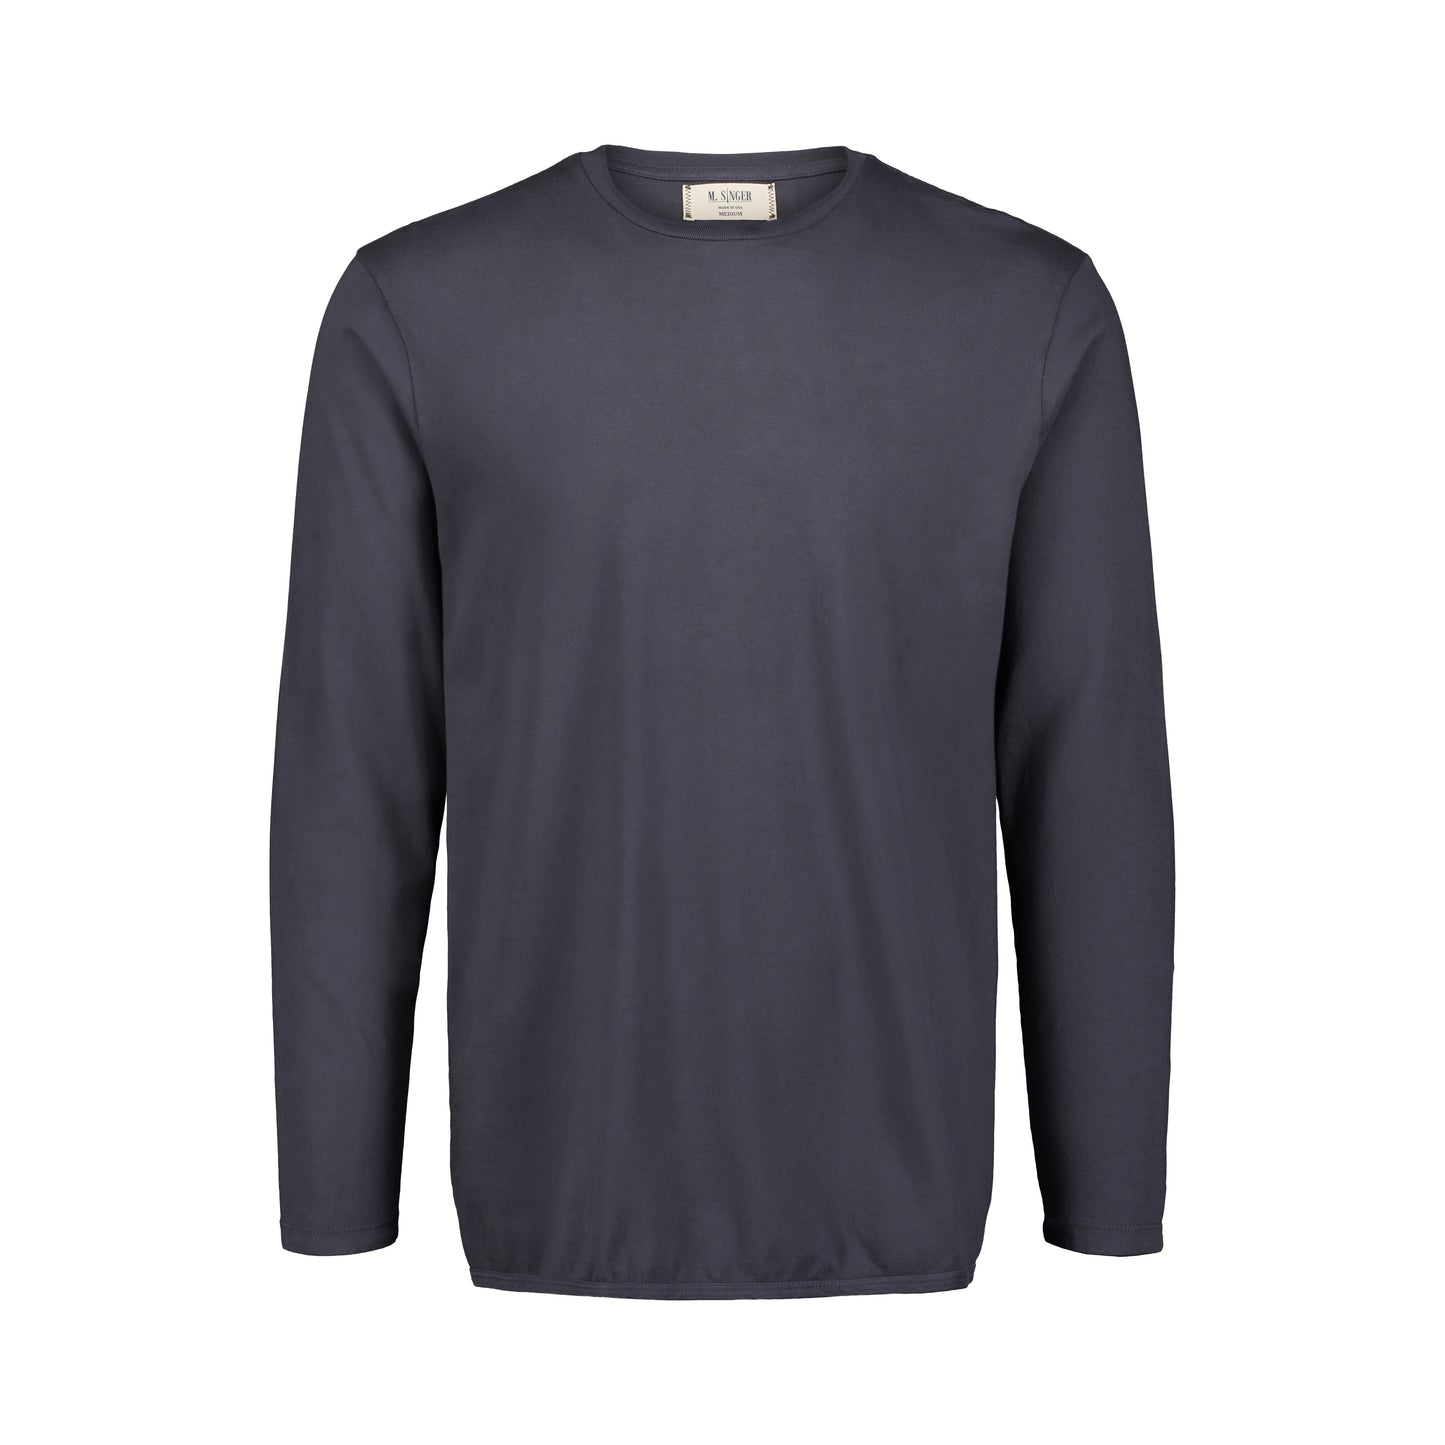 Men's Long Sleeve Shirts Cotton Tees Crew Neck T-Shirt, Black / M